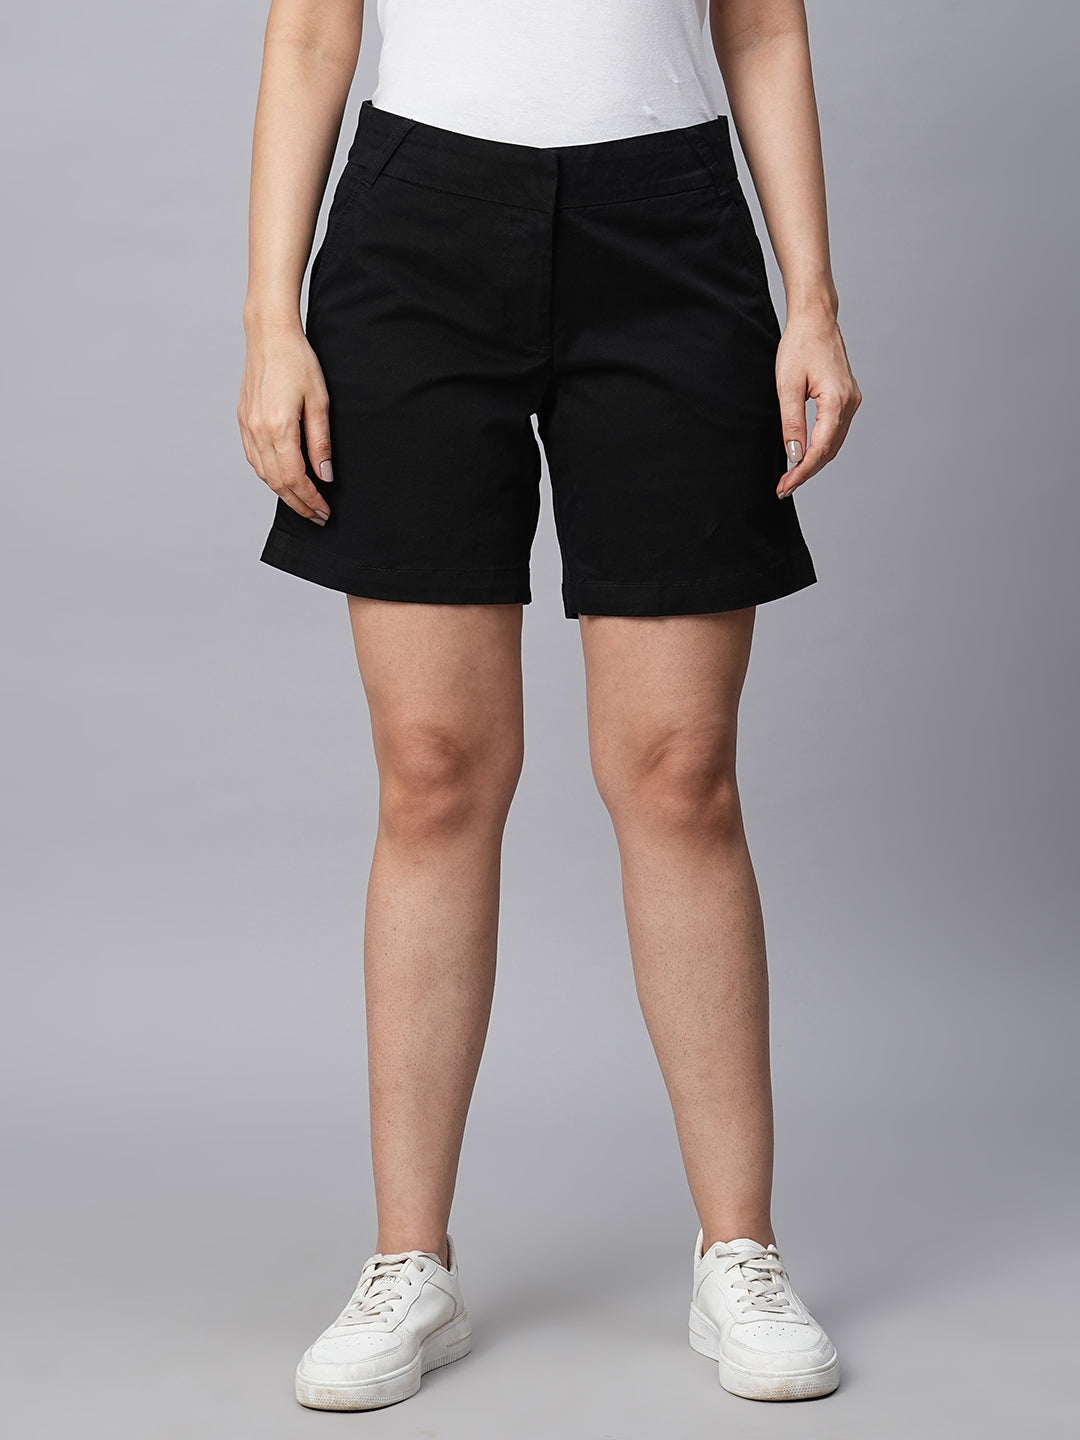 Women's Cotton Lycra Black Regular Fit Shorts